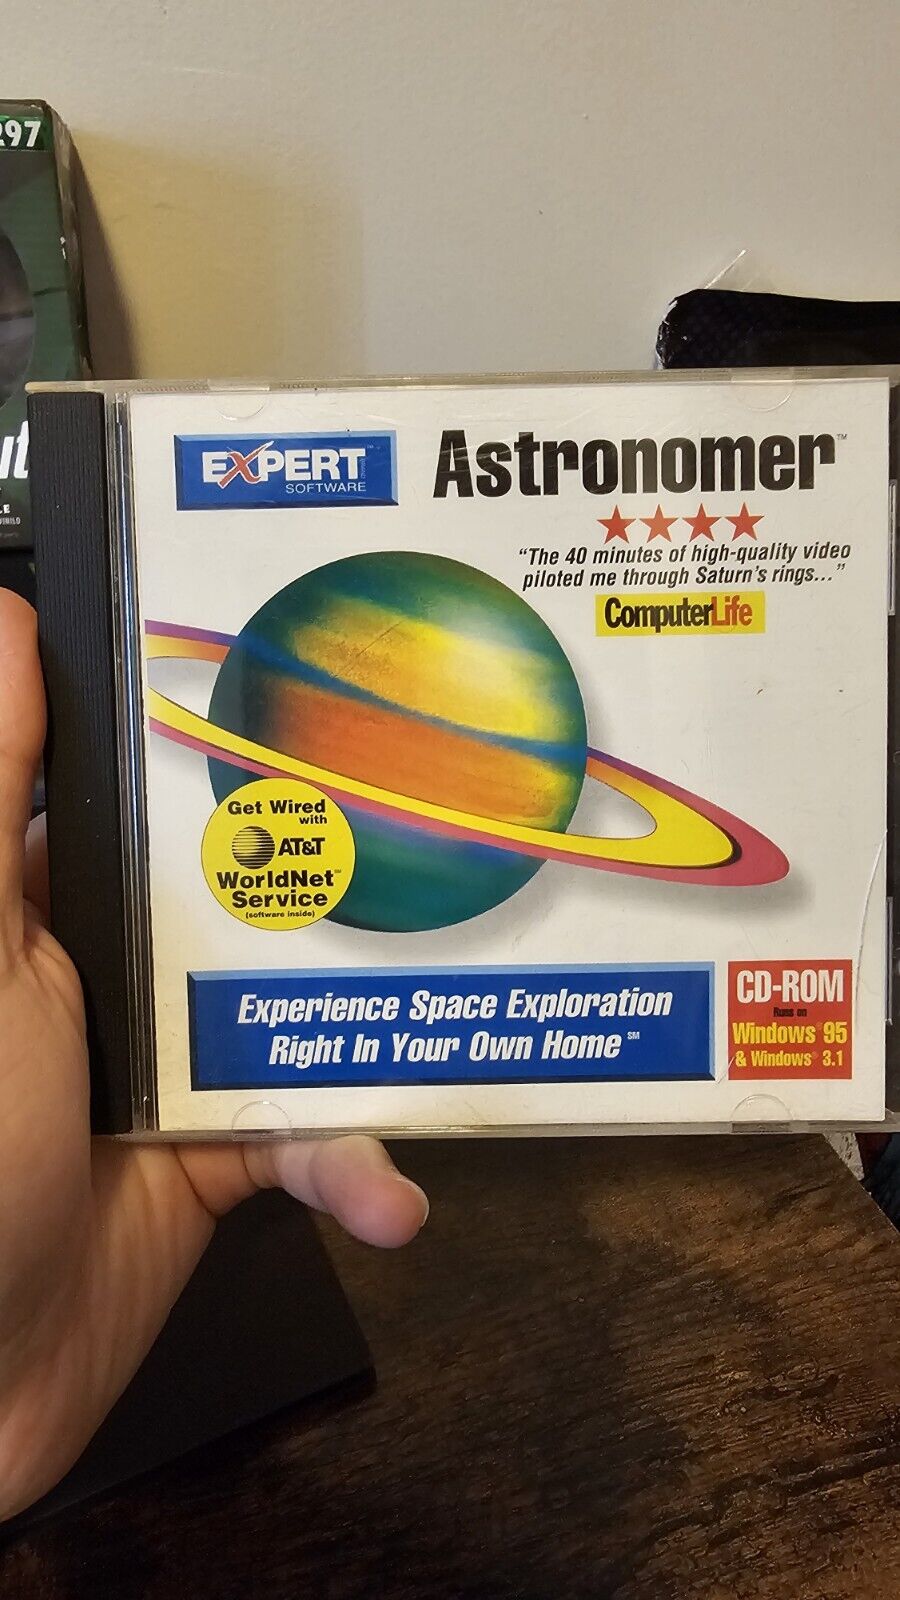 Expert Astronomer PC CD Rom